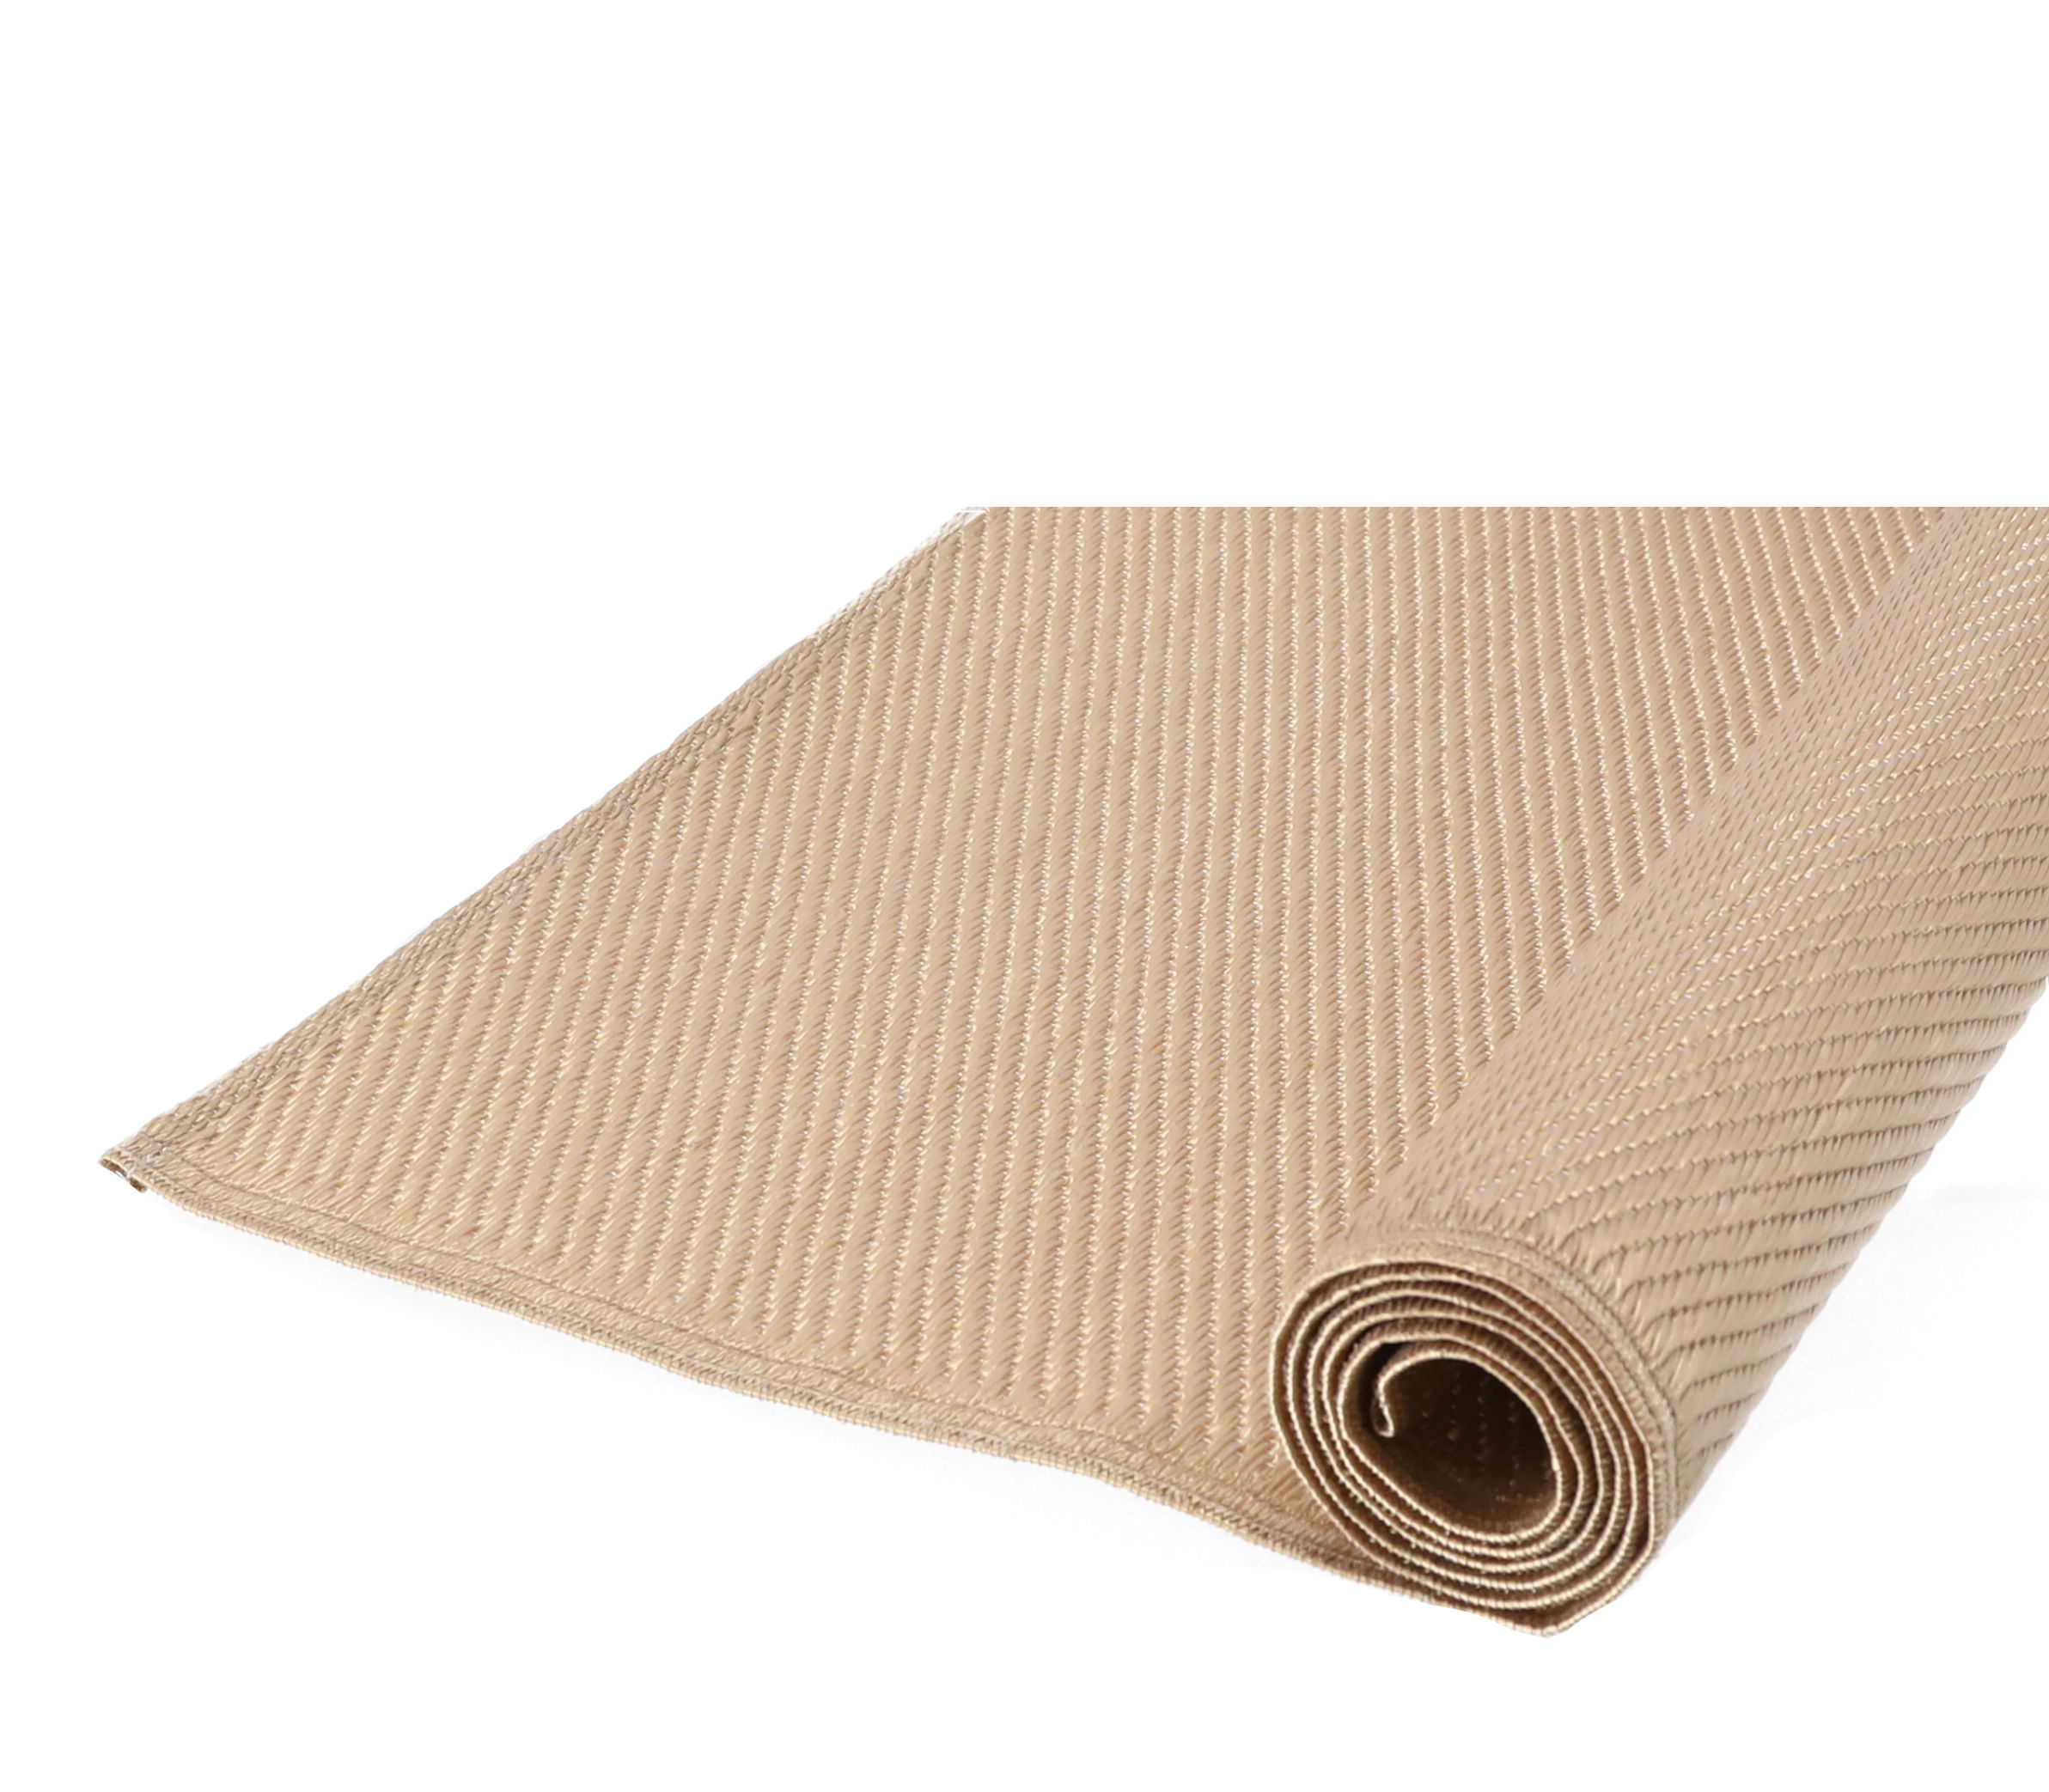 Outdoor Teppich UV beständig - 150 x 90 cm - Wetterfeste Kunststoff Bodenmatte in Jute-Optik